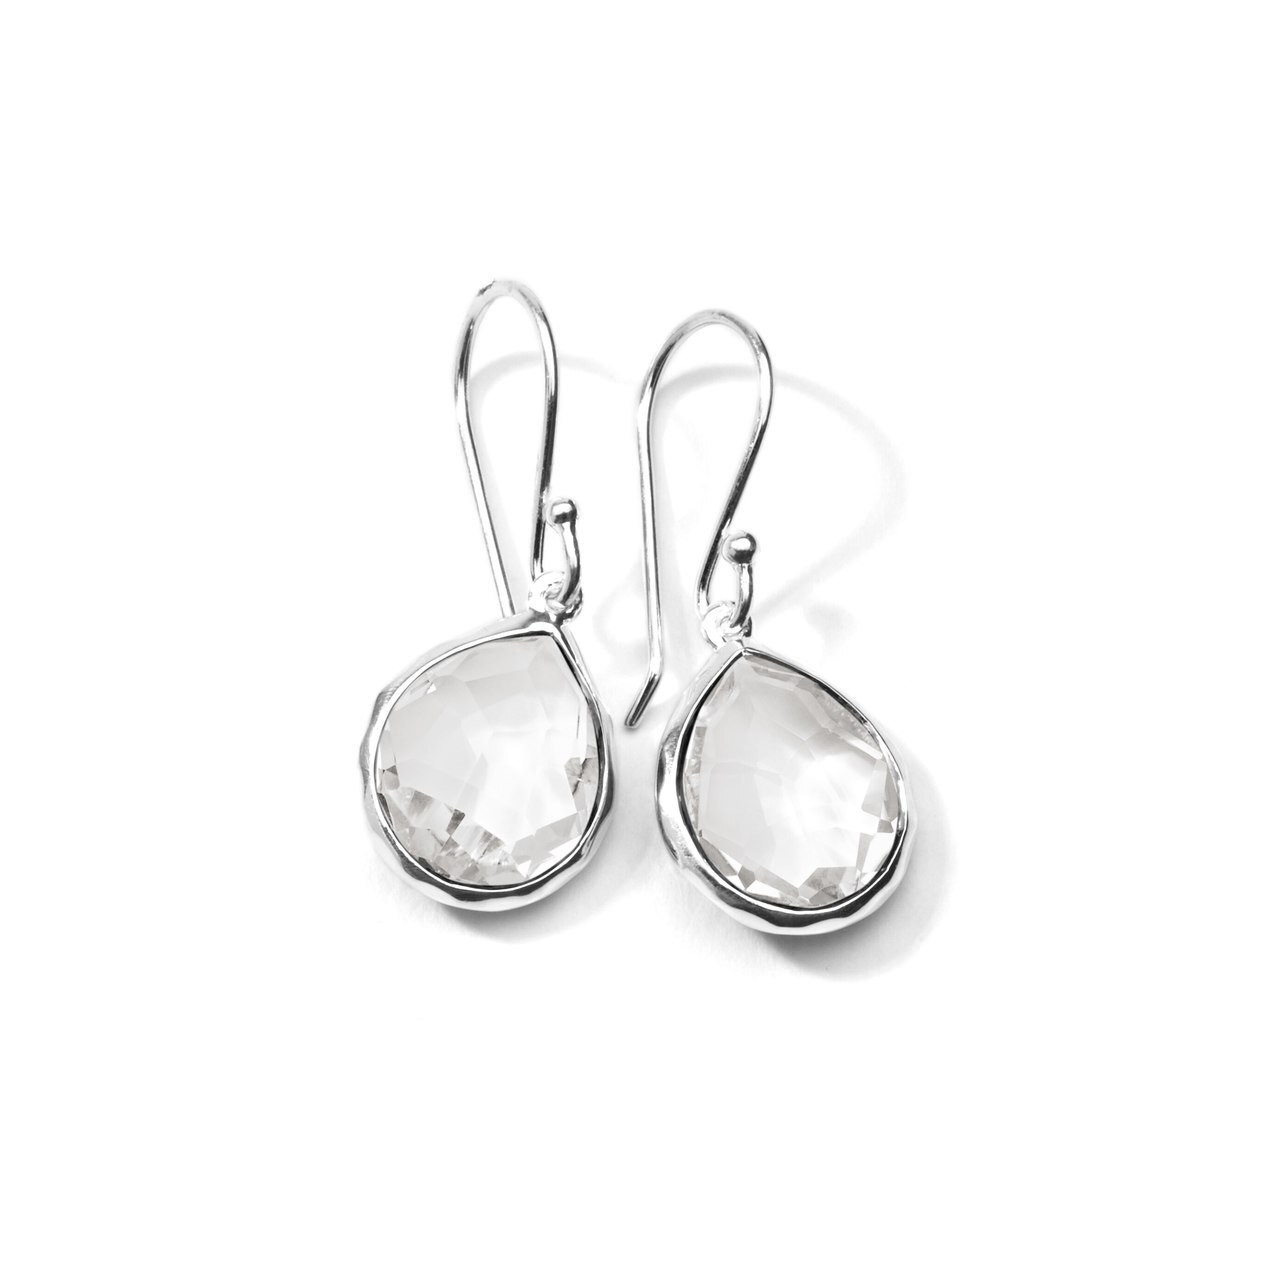 IPPOLITA Mini Teardrop Earrings in 925 Silver and Rock Crystal